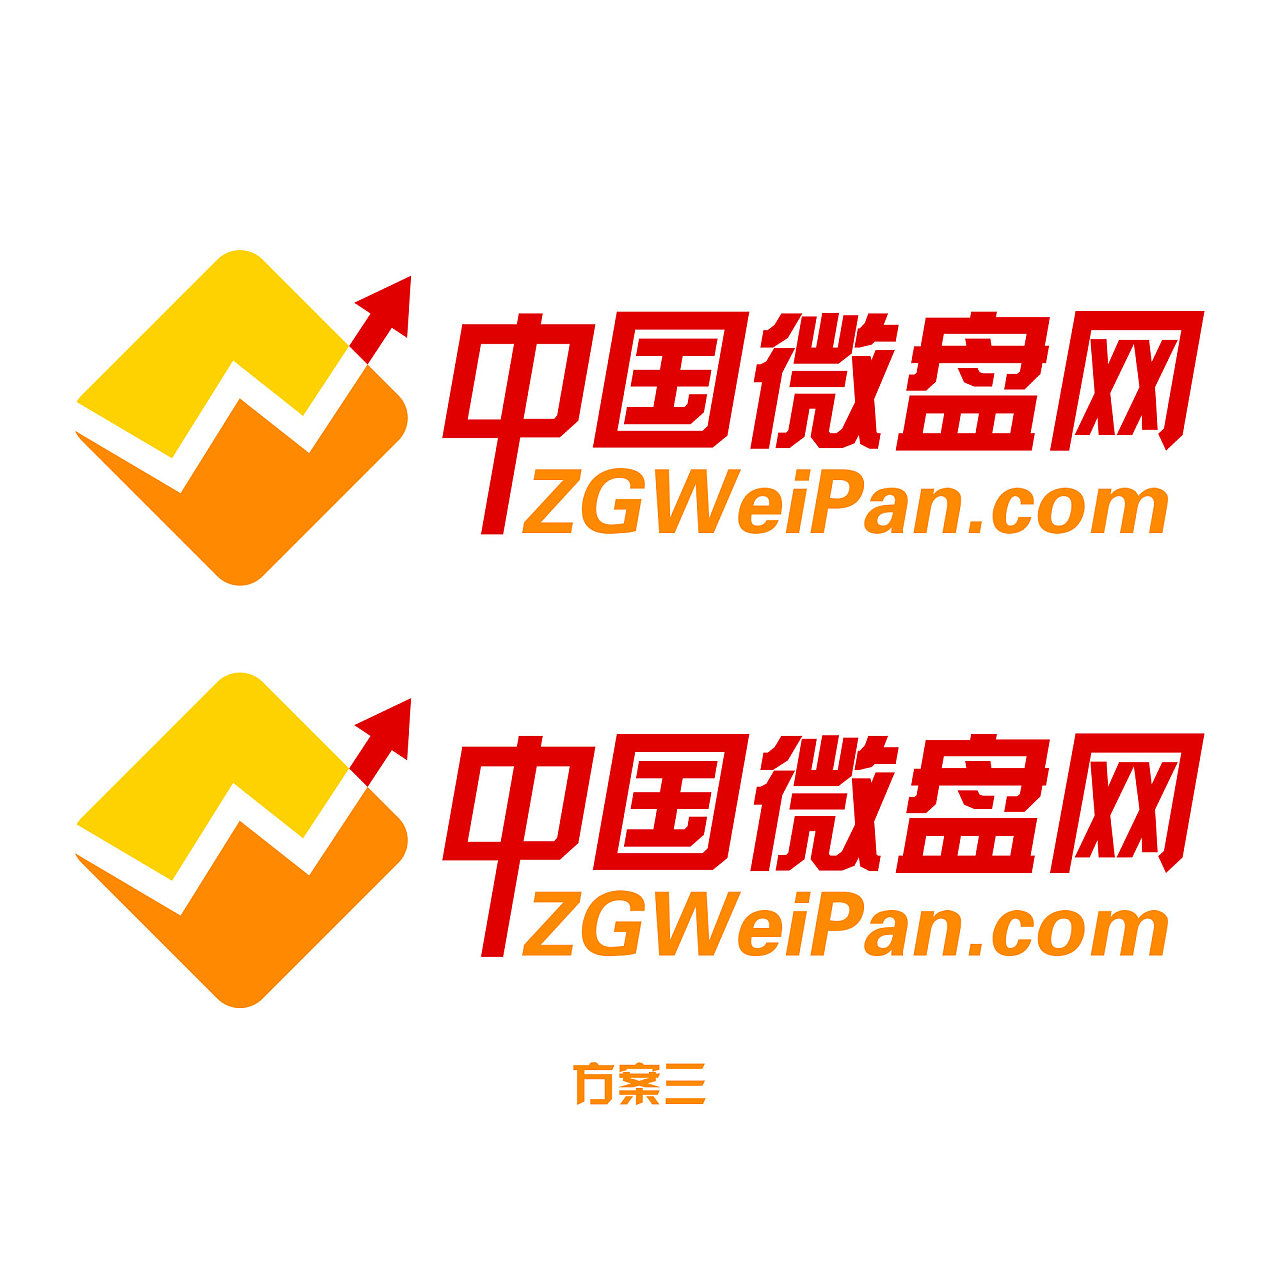 门户网站中国微盘网zgweipan.com网站logo|平